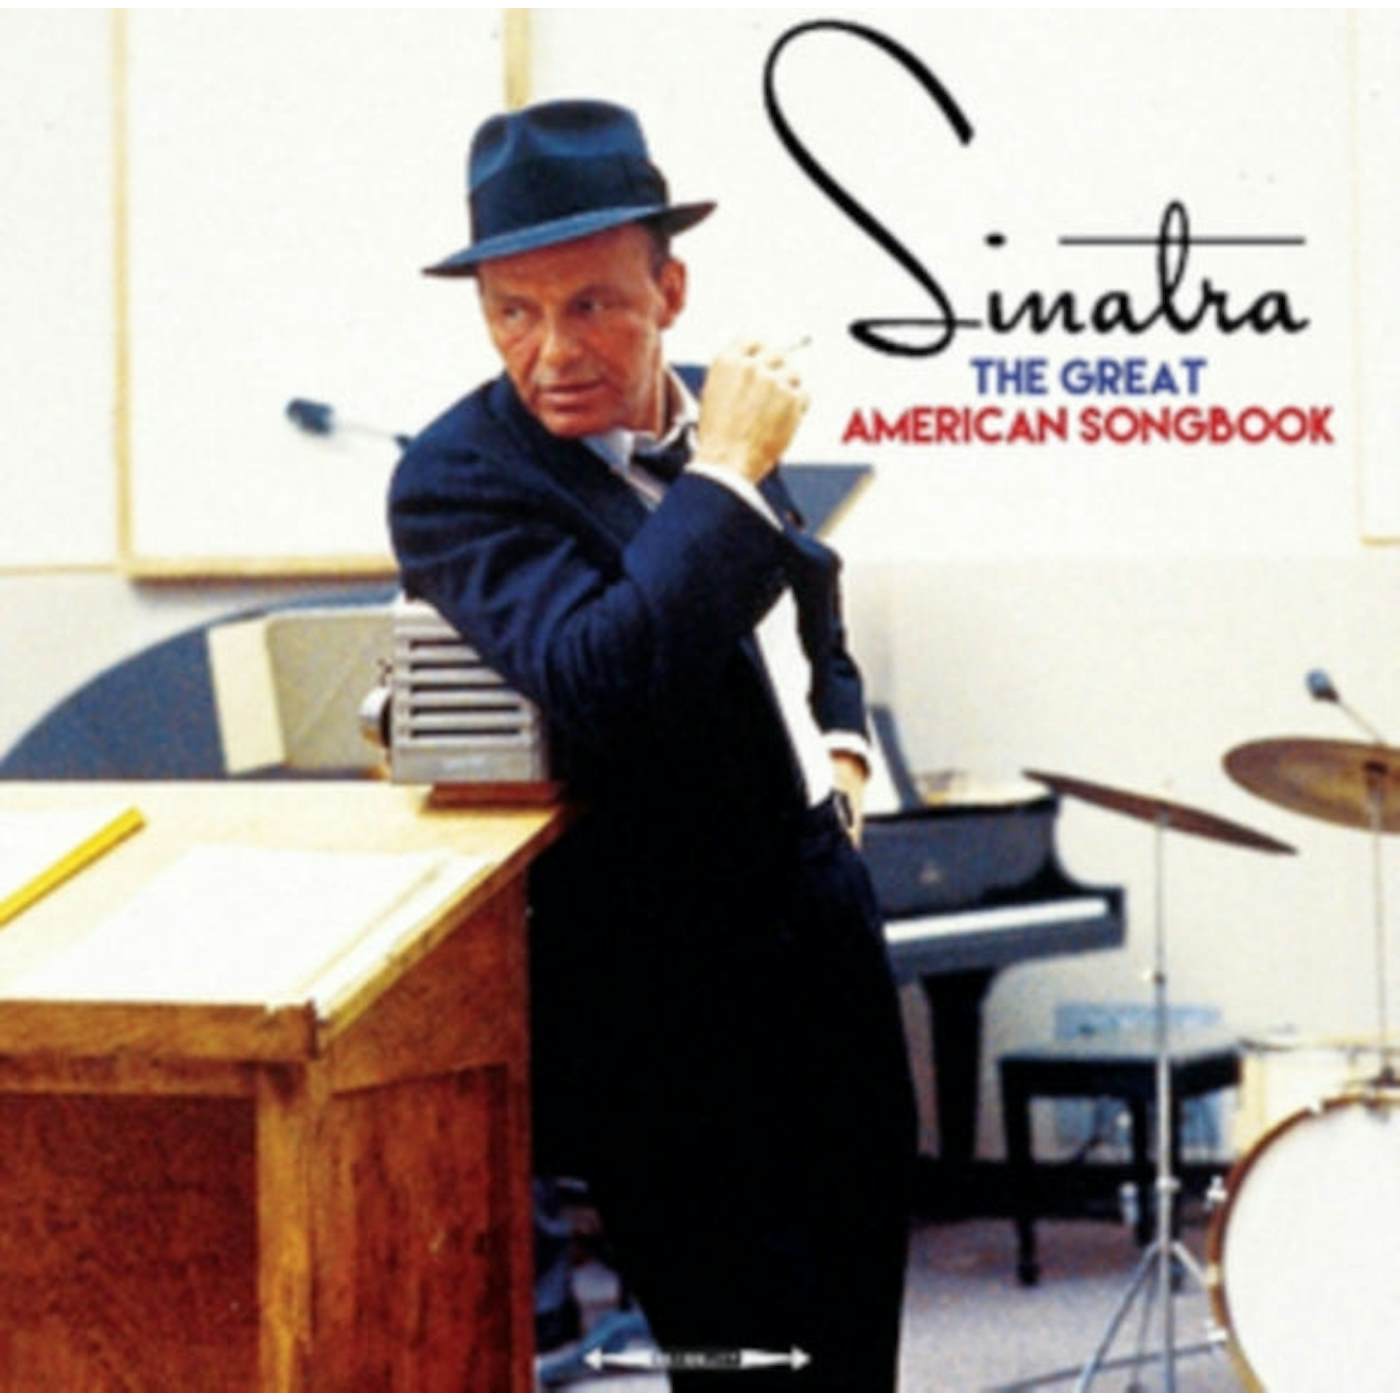 Frank Sinatra LP Vinyl Record - The Great American Songbook